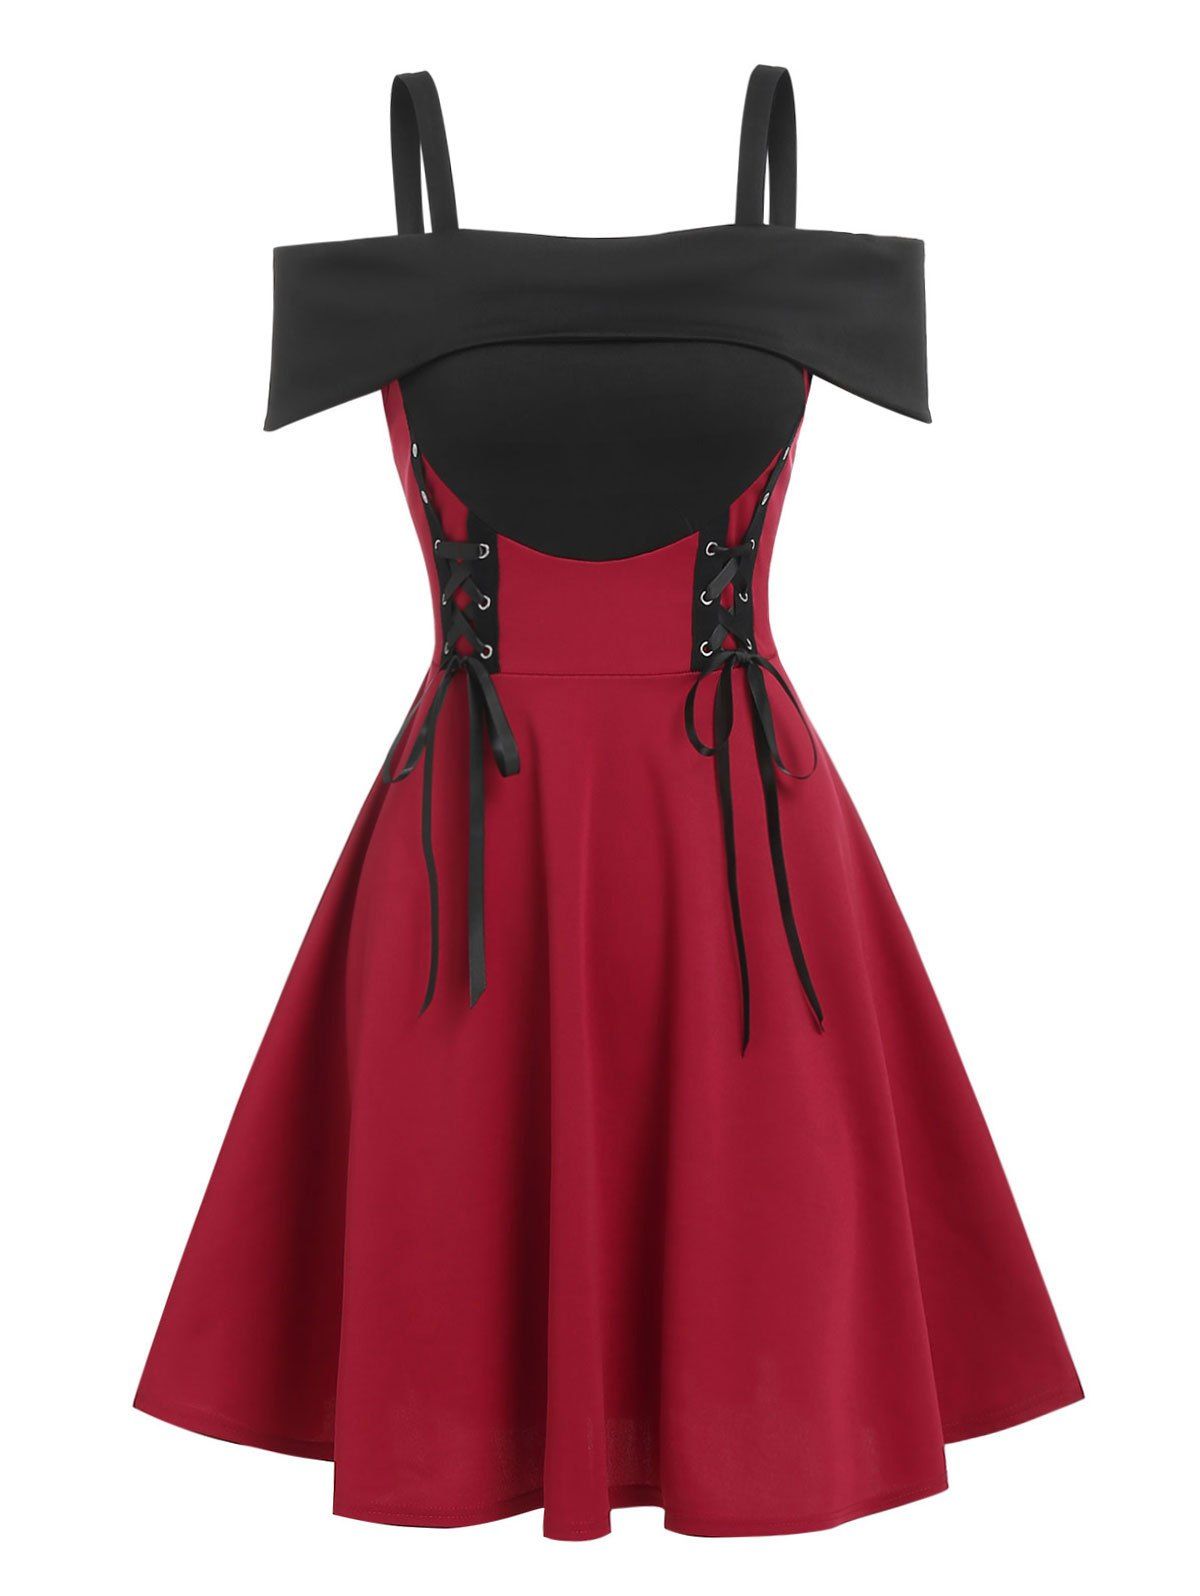 Plaid Cold Shoulder Lace Up Dress - RED S